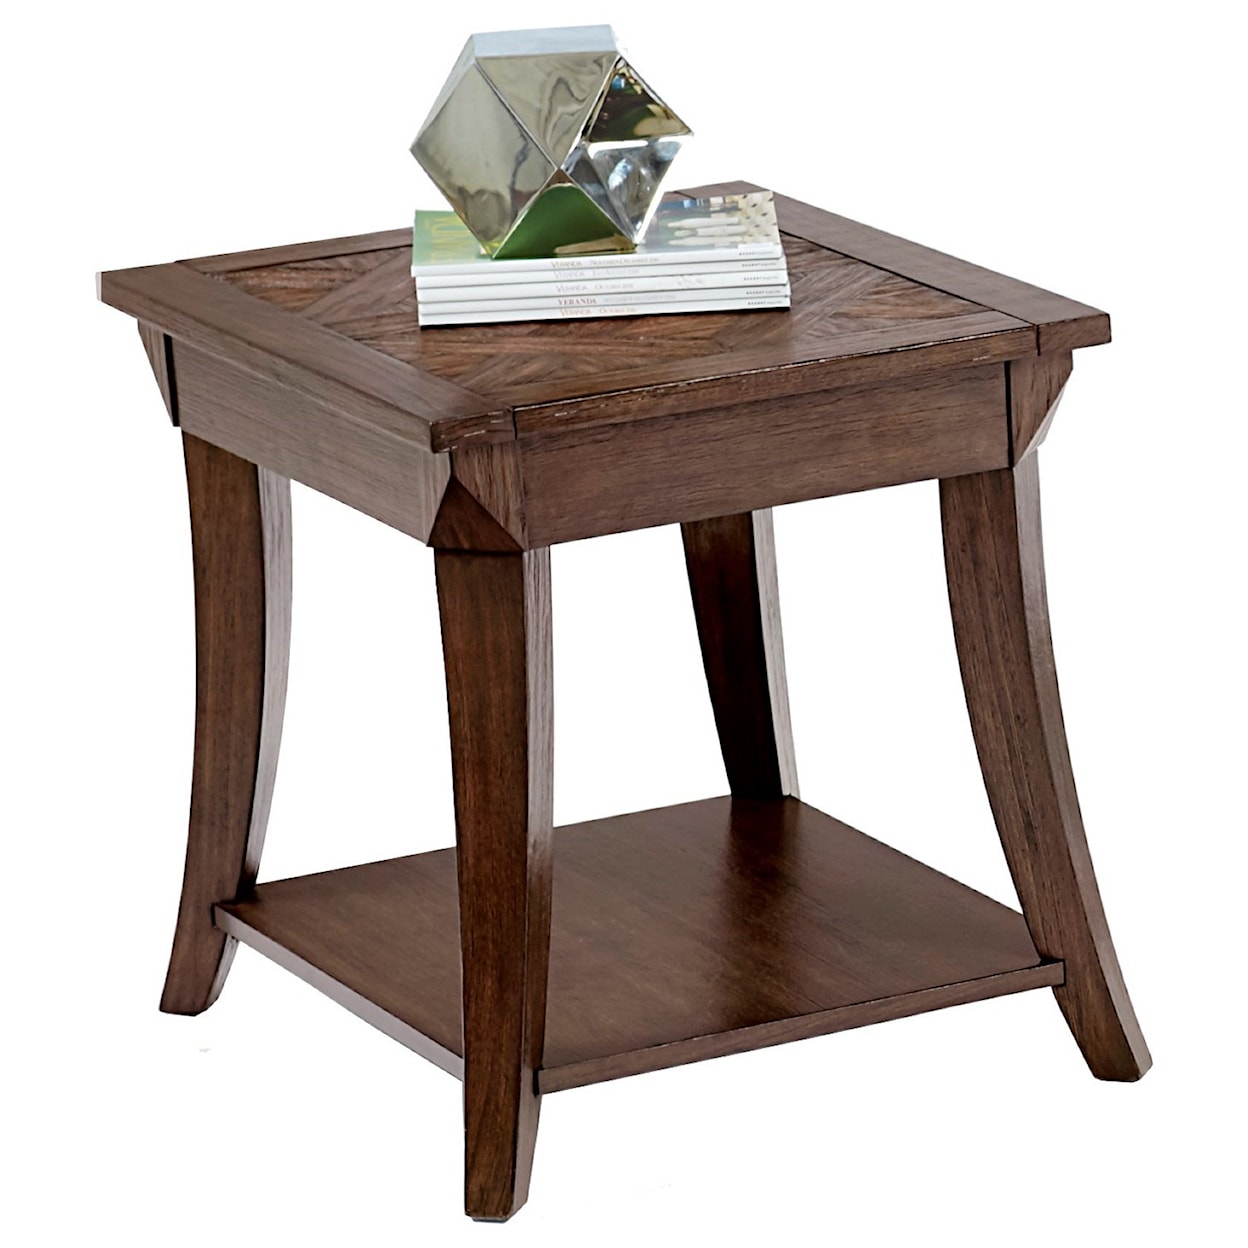 Progressive Furniture Appeal I Rectangular End Table